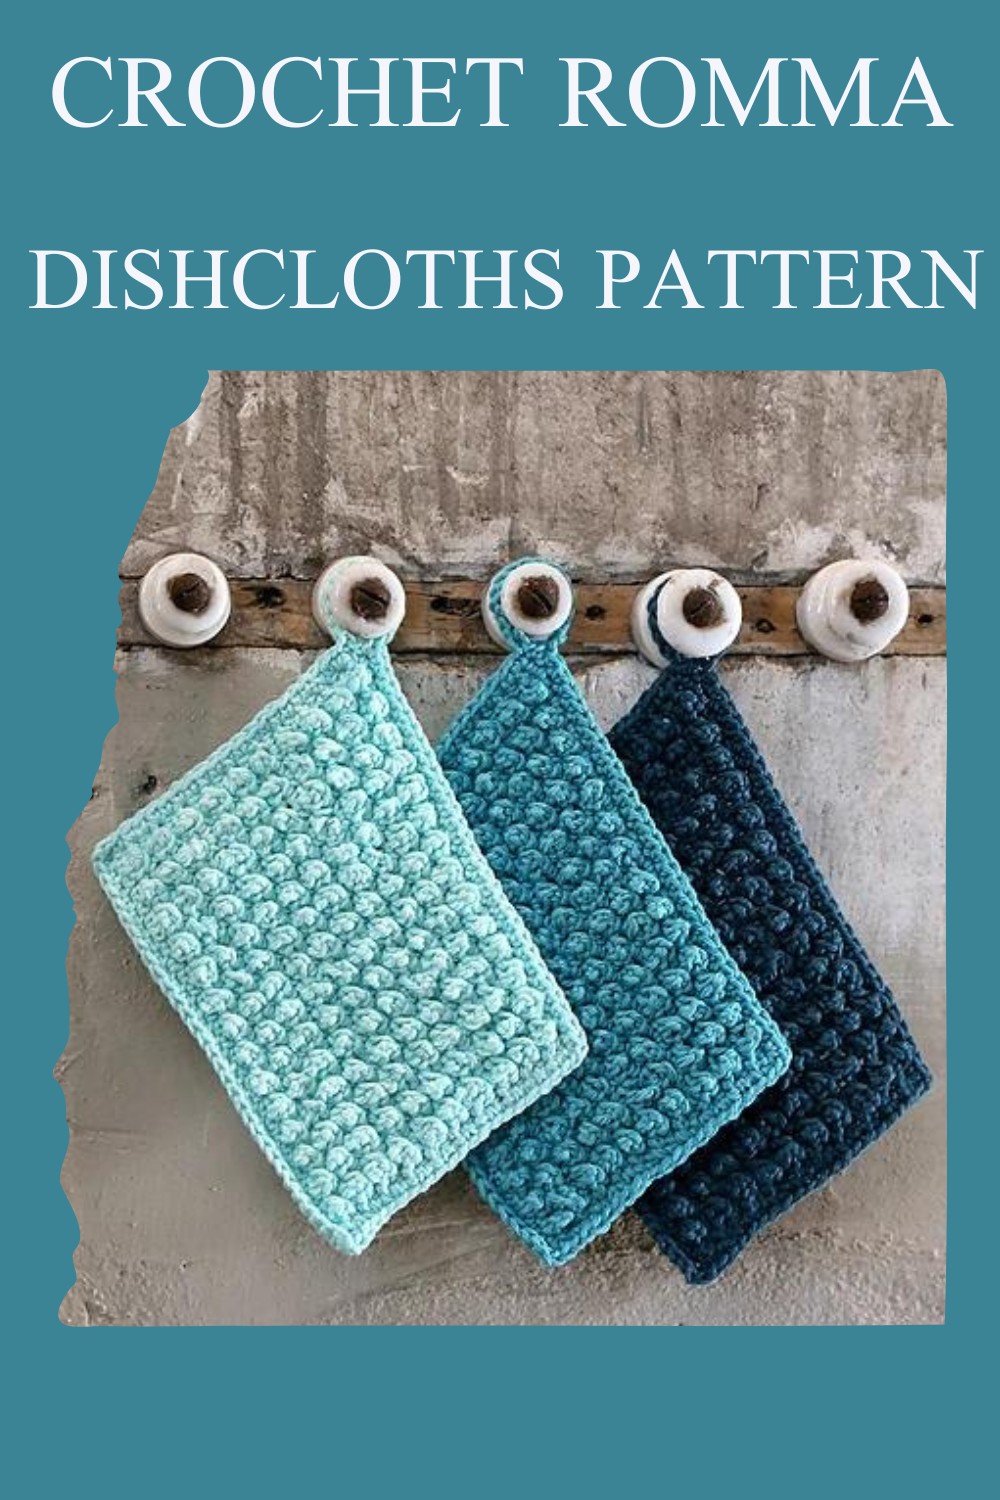 Crochet Romma Dishcloths Pattern